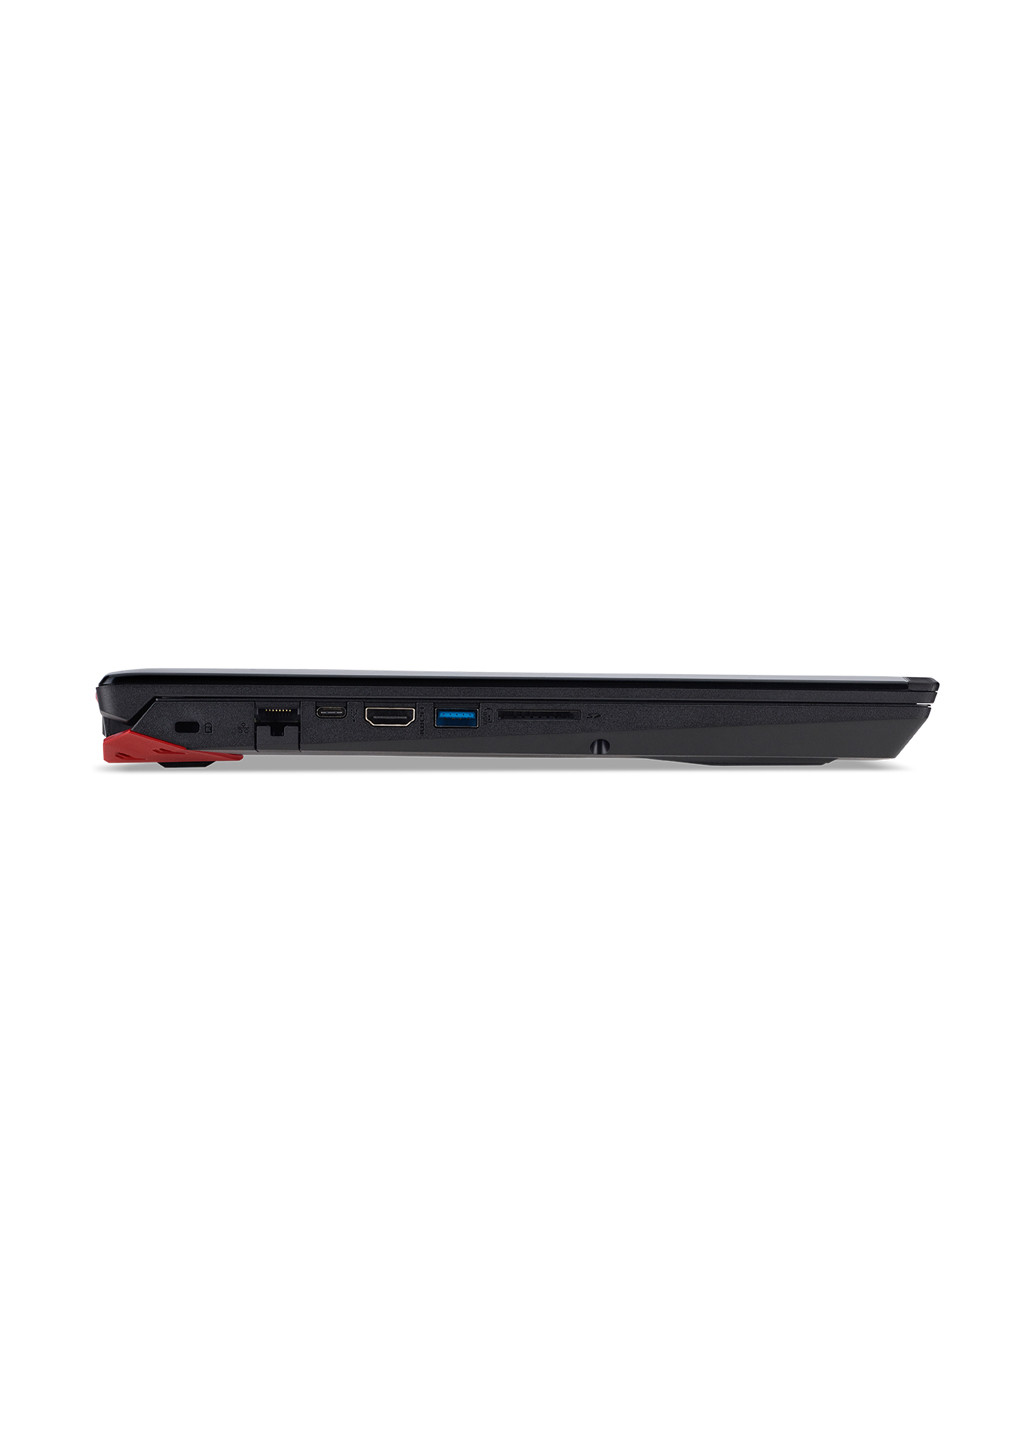 Ноутбук Acer predator helios 300 ph315-51 (nh.q3feu.066) black (134076201)